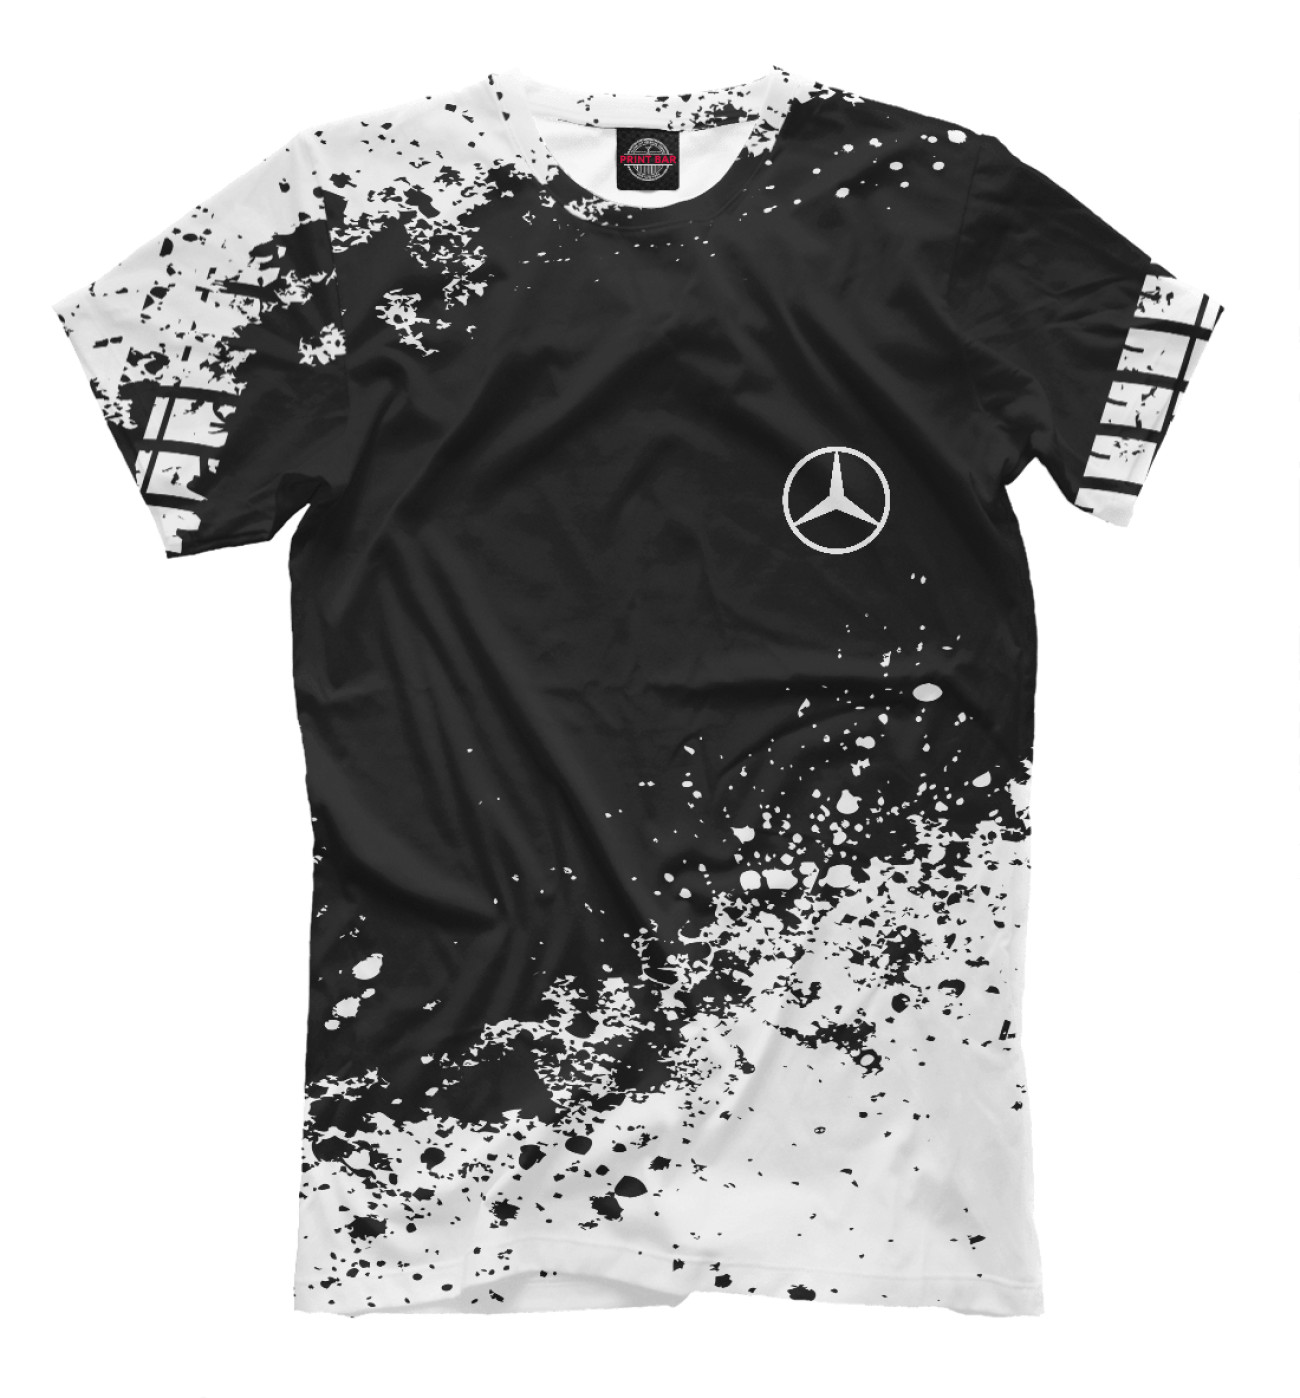 Мужская Футболка Mercedes-Benz abstract sport uniform, артикул: MER-443856-fut-2